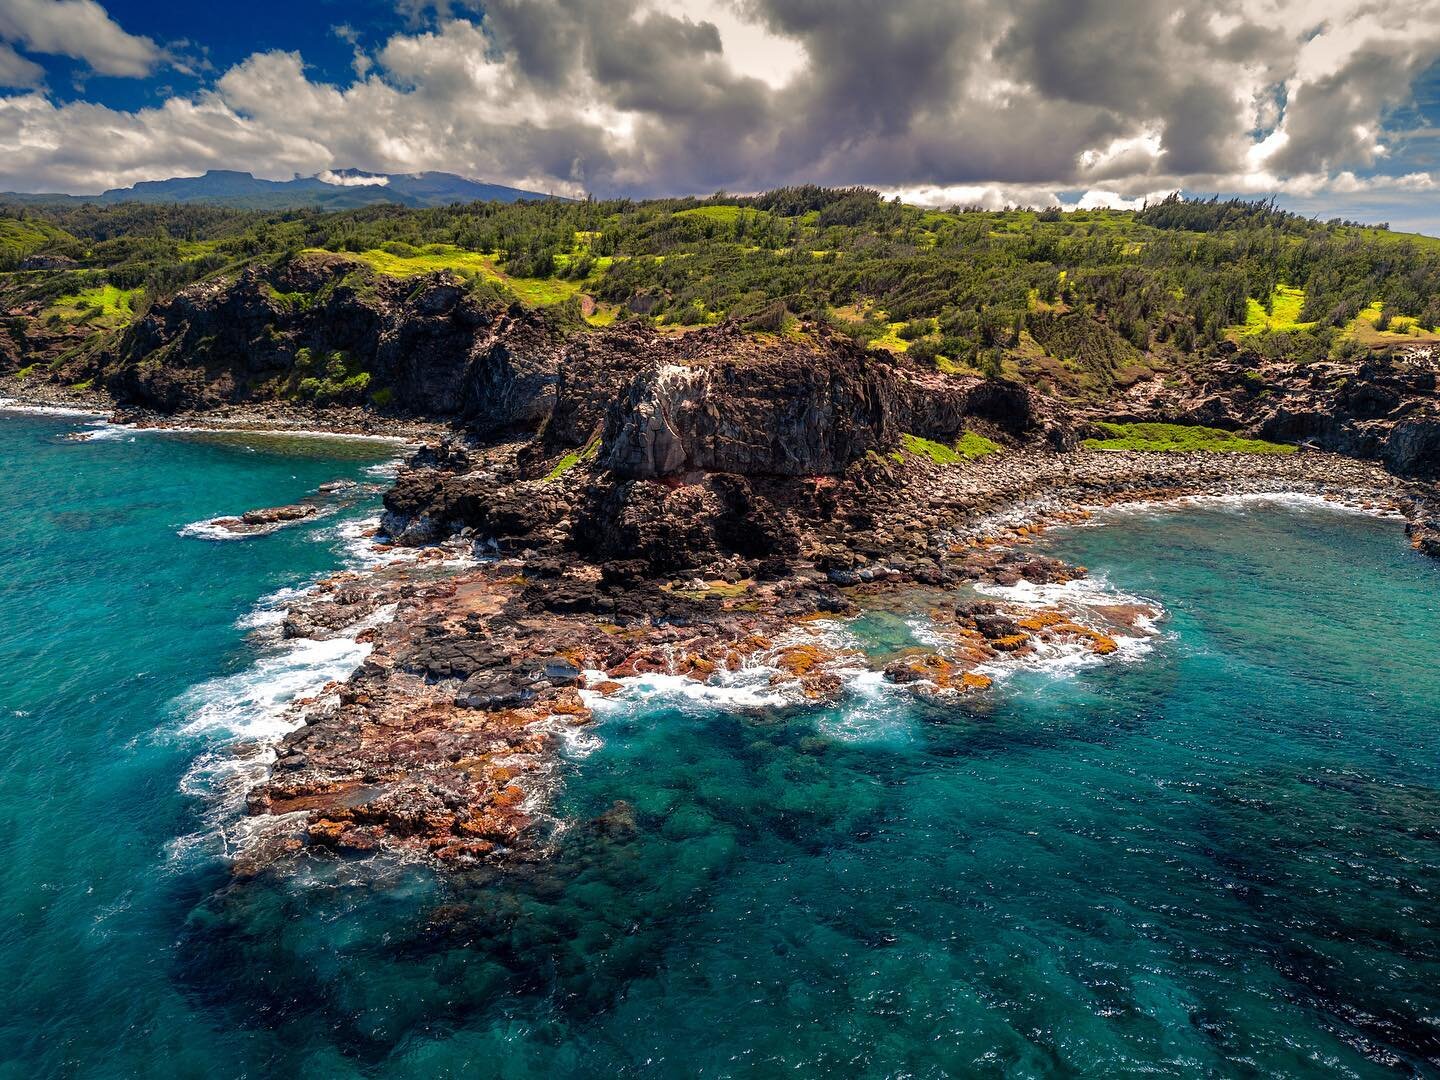 &quot;Coasting&quot;

The north shore of of Maui near Poelua Bay.

📸 DJI Mini Pro 3

#drone_photography #drone #pictas #raw #raw_beaches #raw_edit #raw_potd #raw_world #raw_landscape #raw__photography #raw__drone #edge #photo #photography #landscape